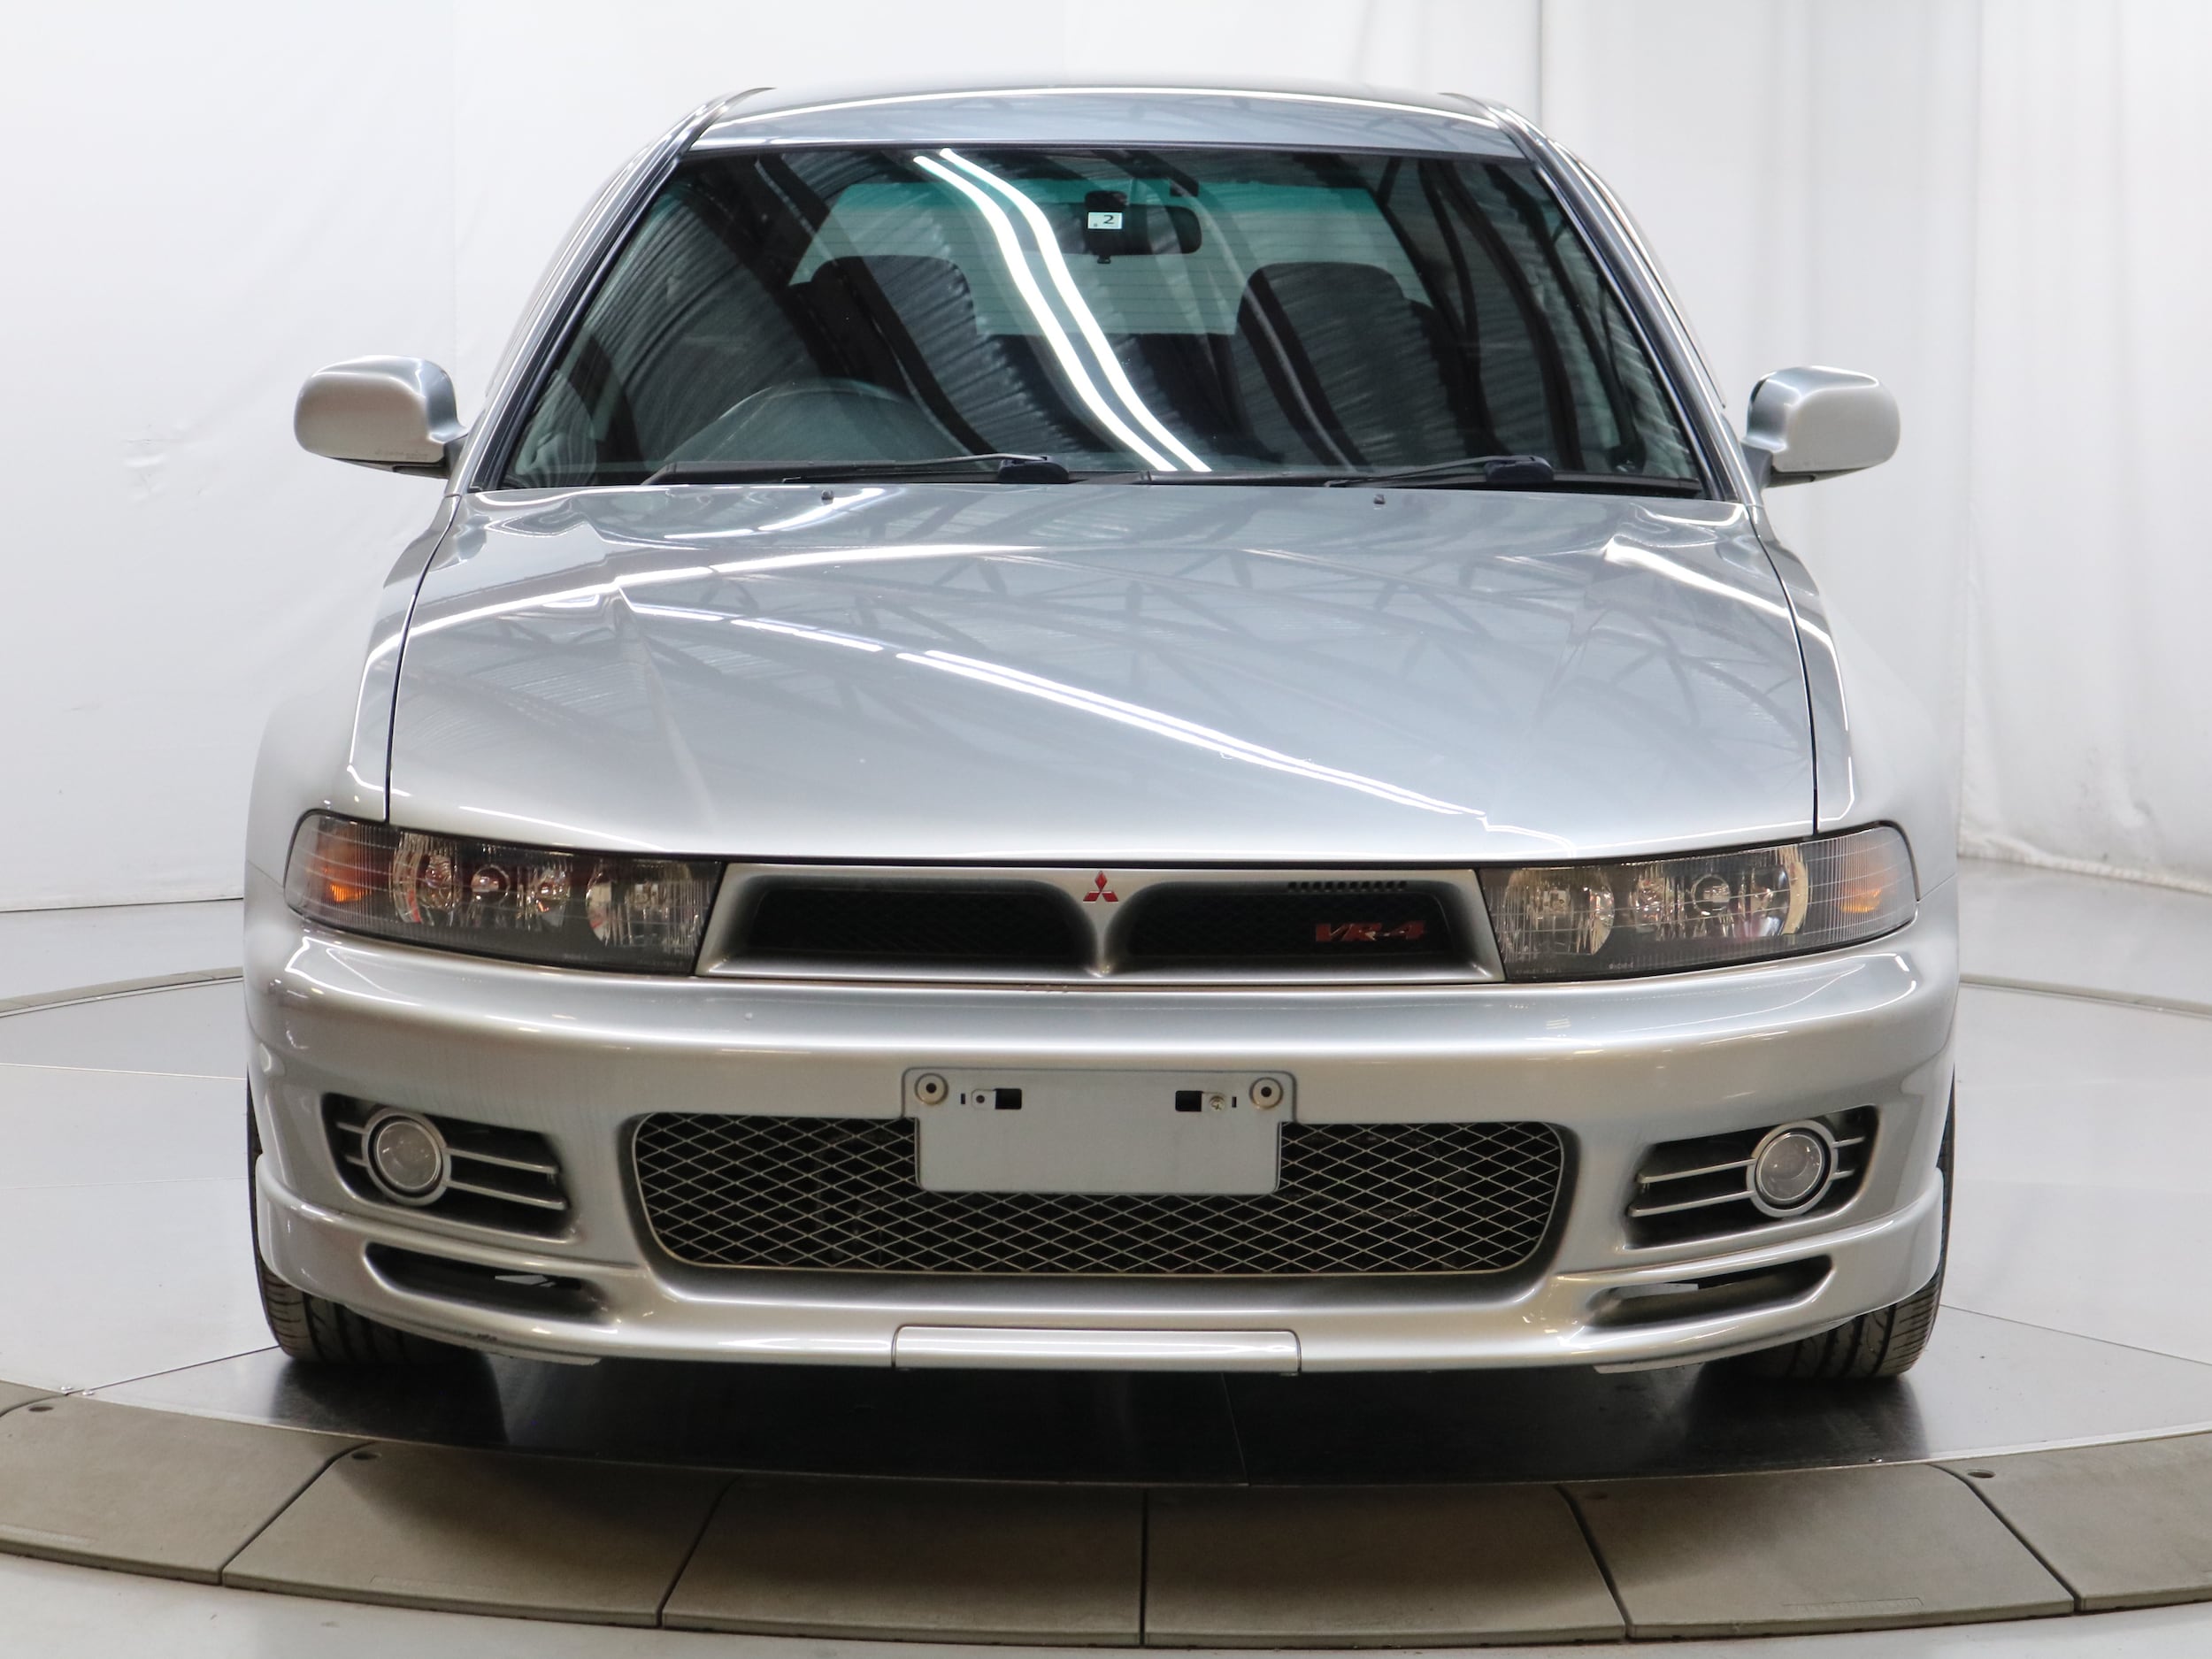 1998 Mitsubishi Legnum 3